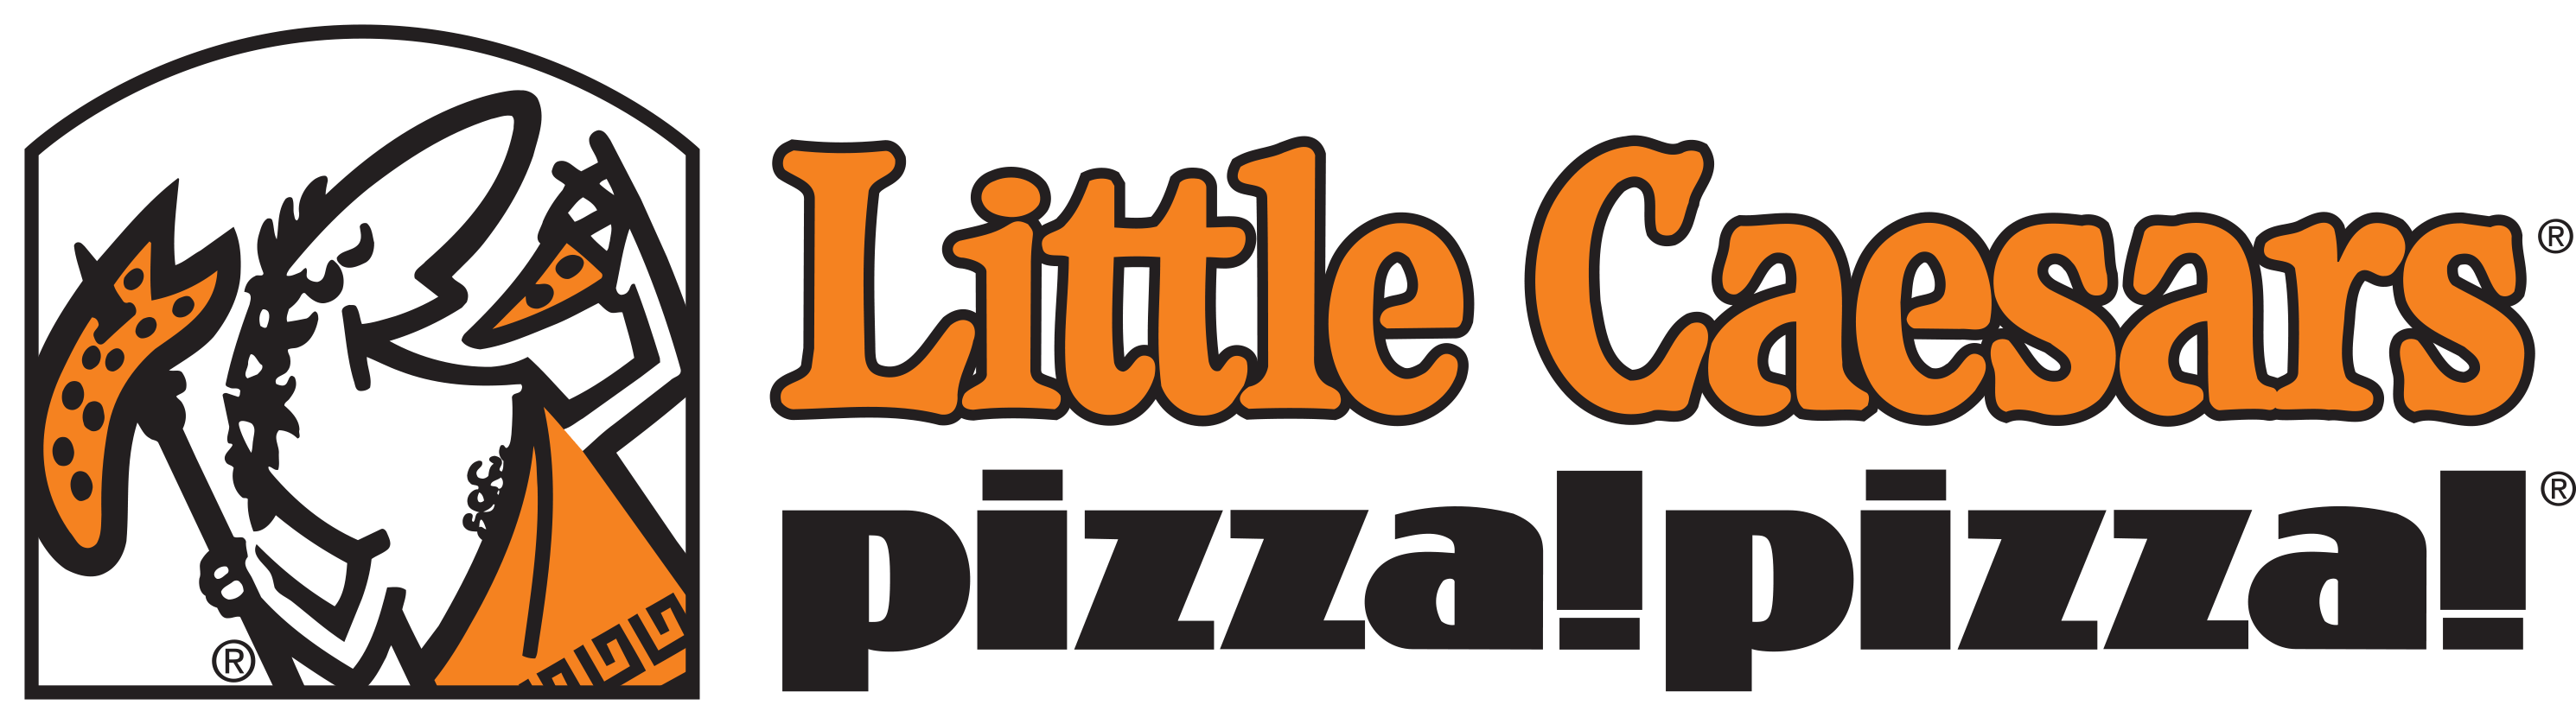 Little Ceasars Pizza Logo - Little Caesars | Pizza! | Pinterest | Pizza, Creative pizza and Shop ...